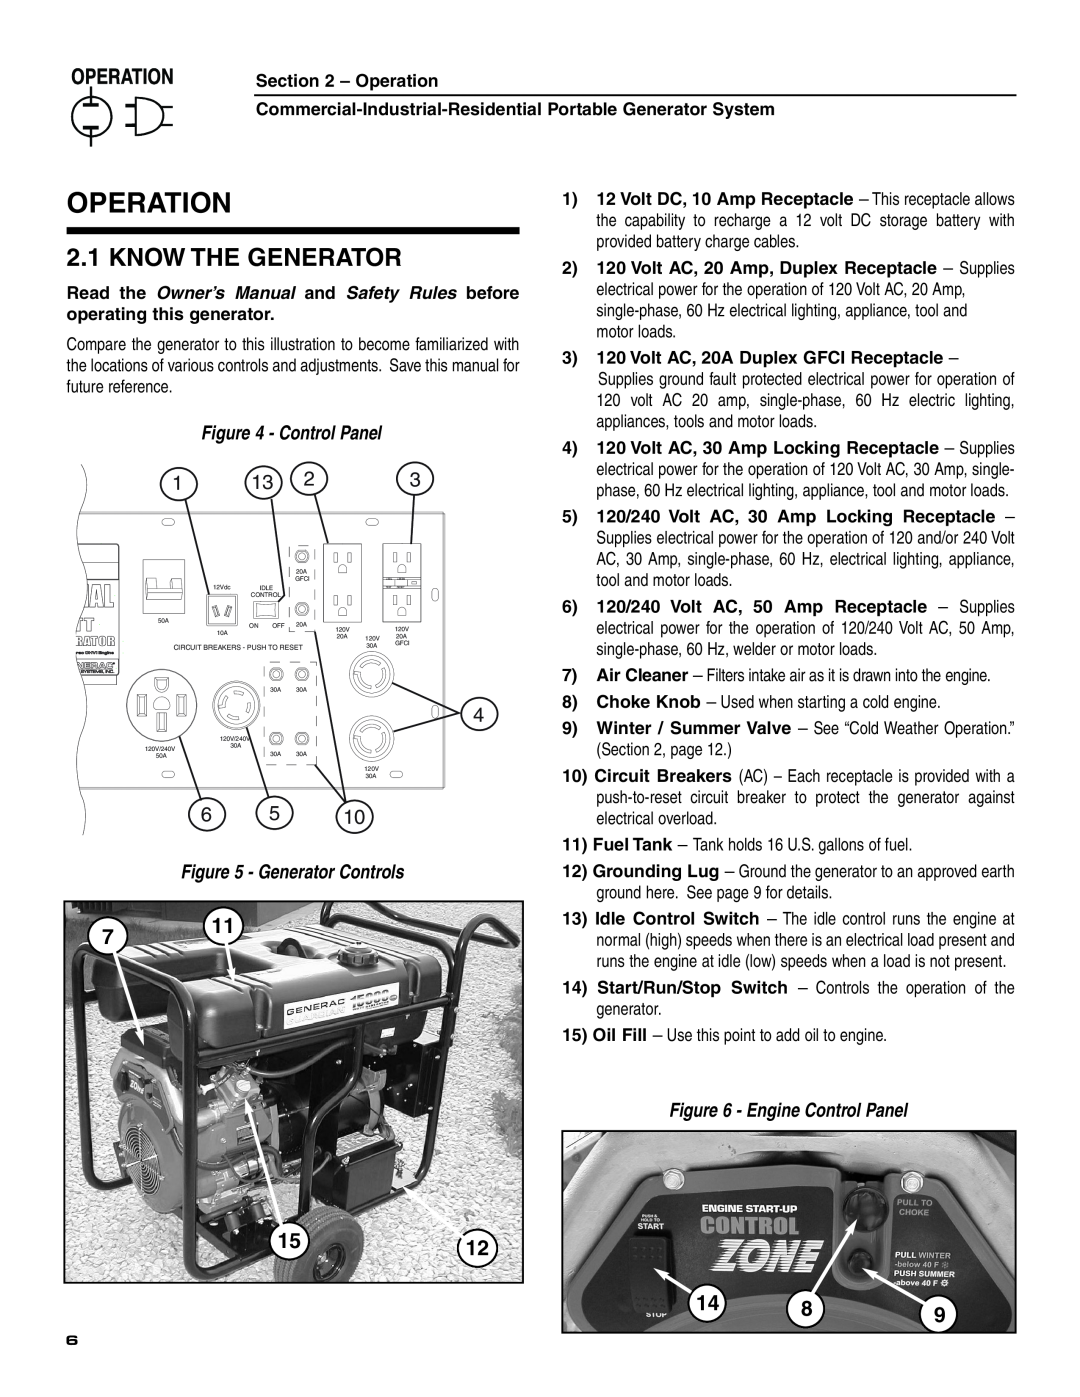 Generac 004451 ,004582, 004451, 004582 Operation, Know The Generator, 1512, Generator Controls, Engine Control Panel 